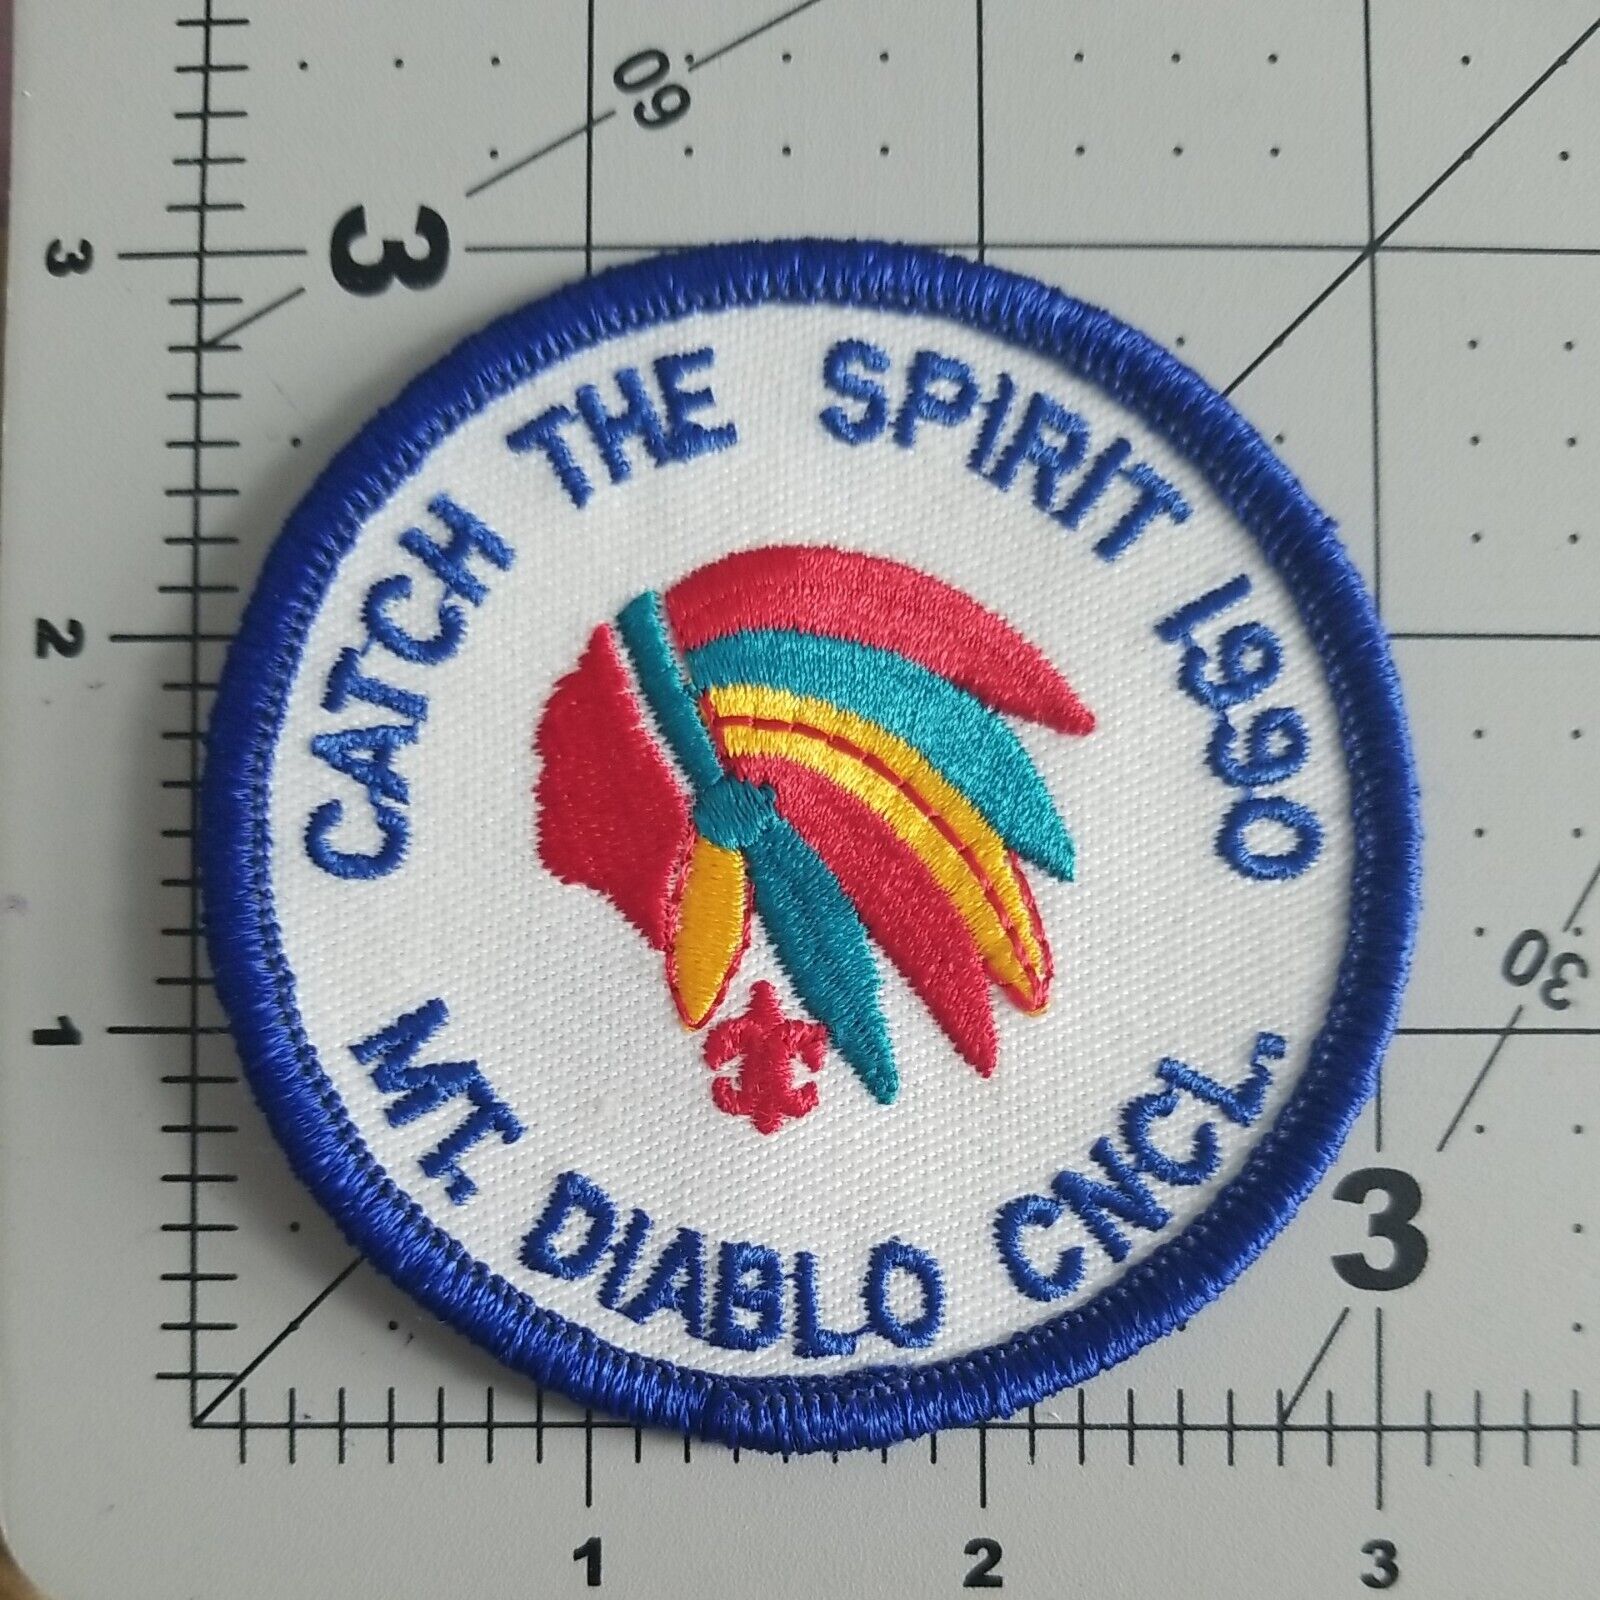 BSA Patch Mount Diablo Council CA 1990 Catch The Spirit Native American